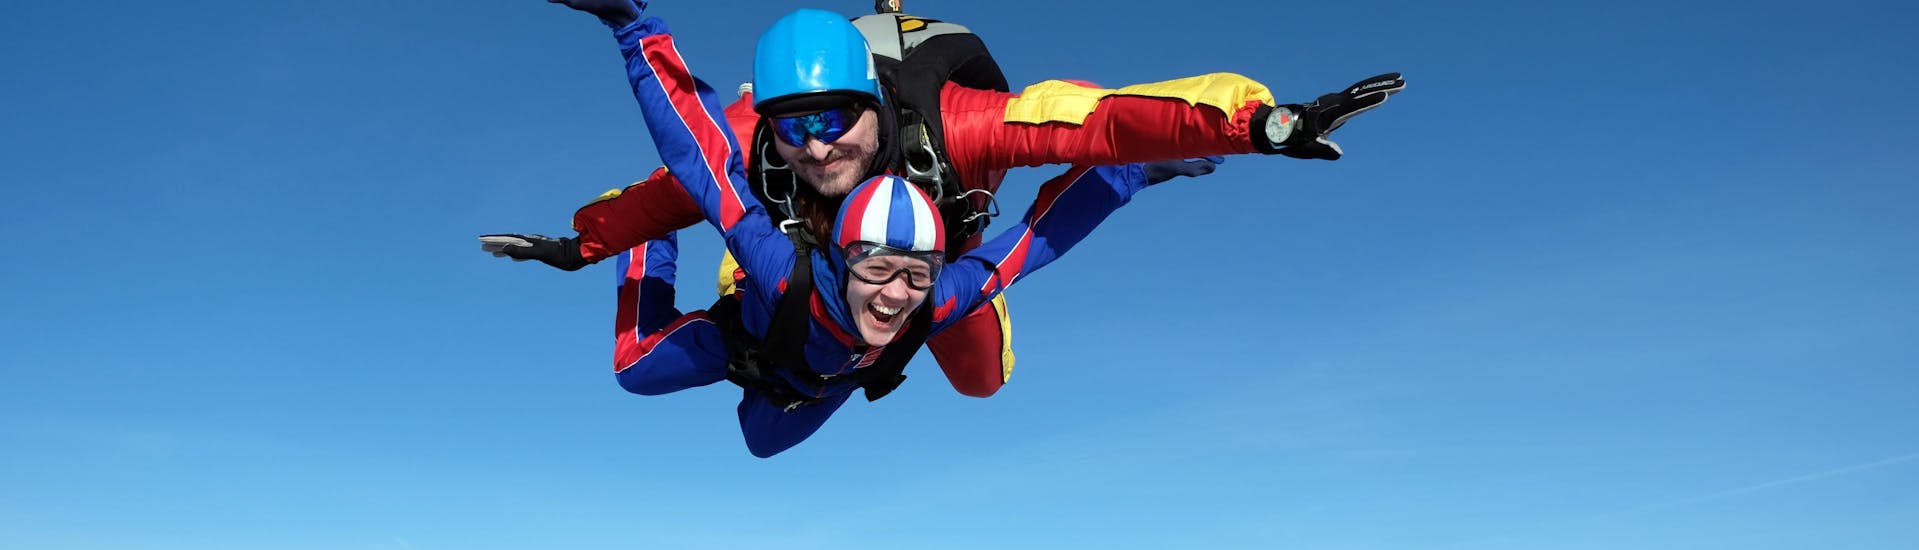 Paracaidismo en tándem con Black Forest Skydive - Hero image